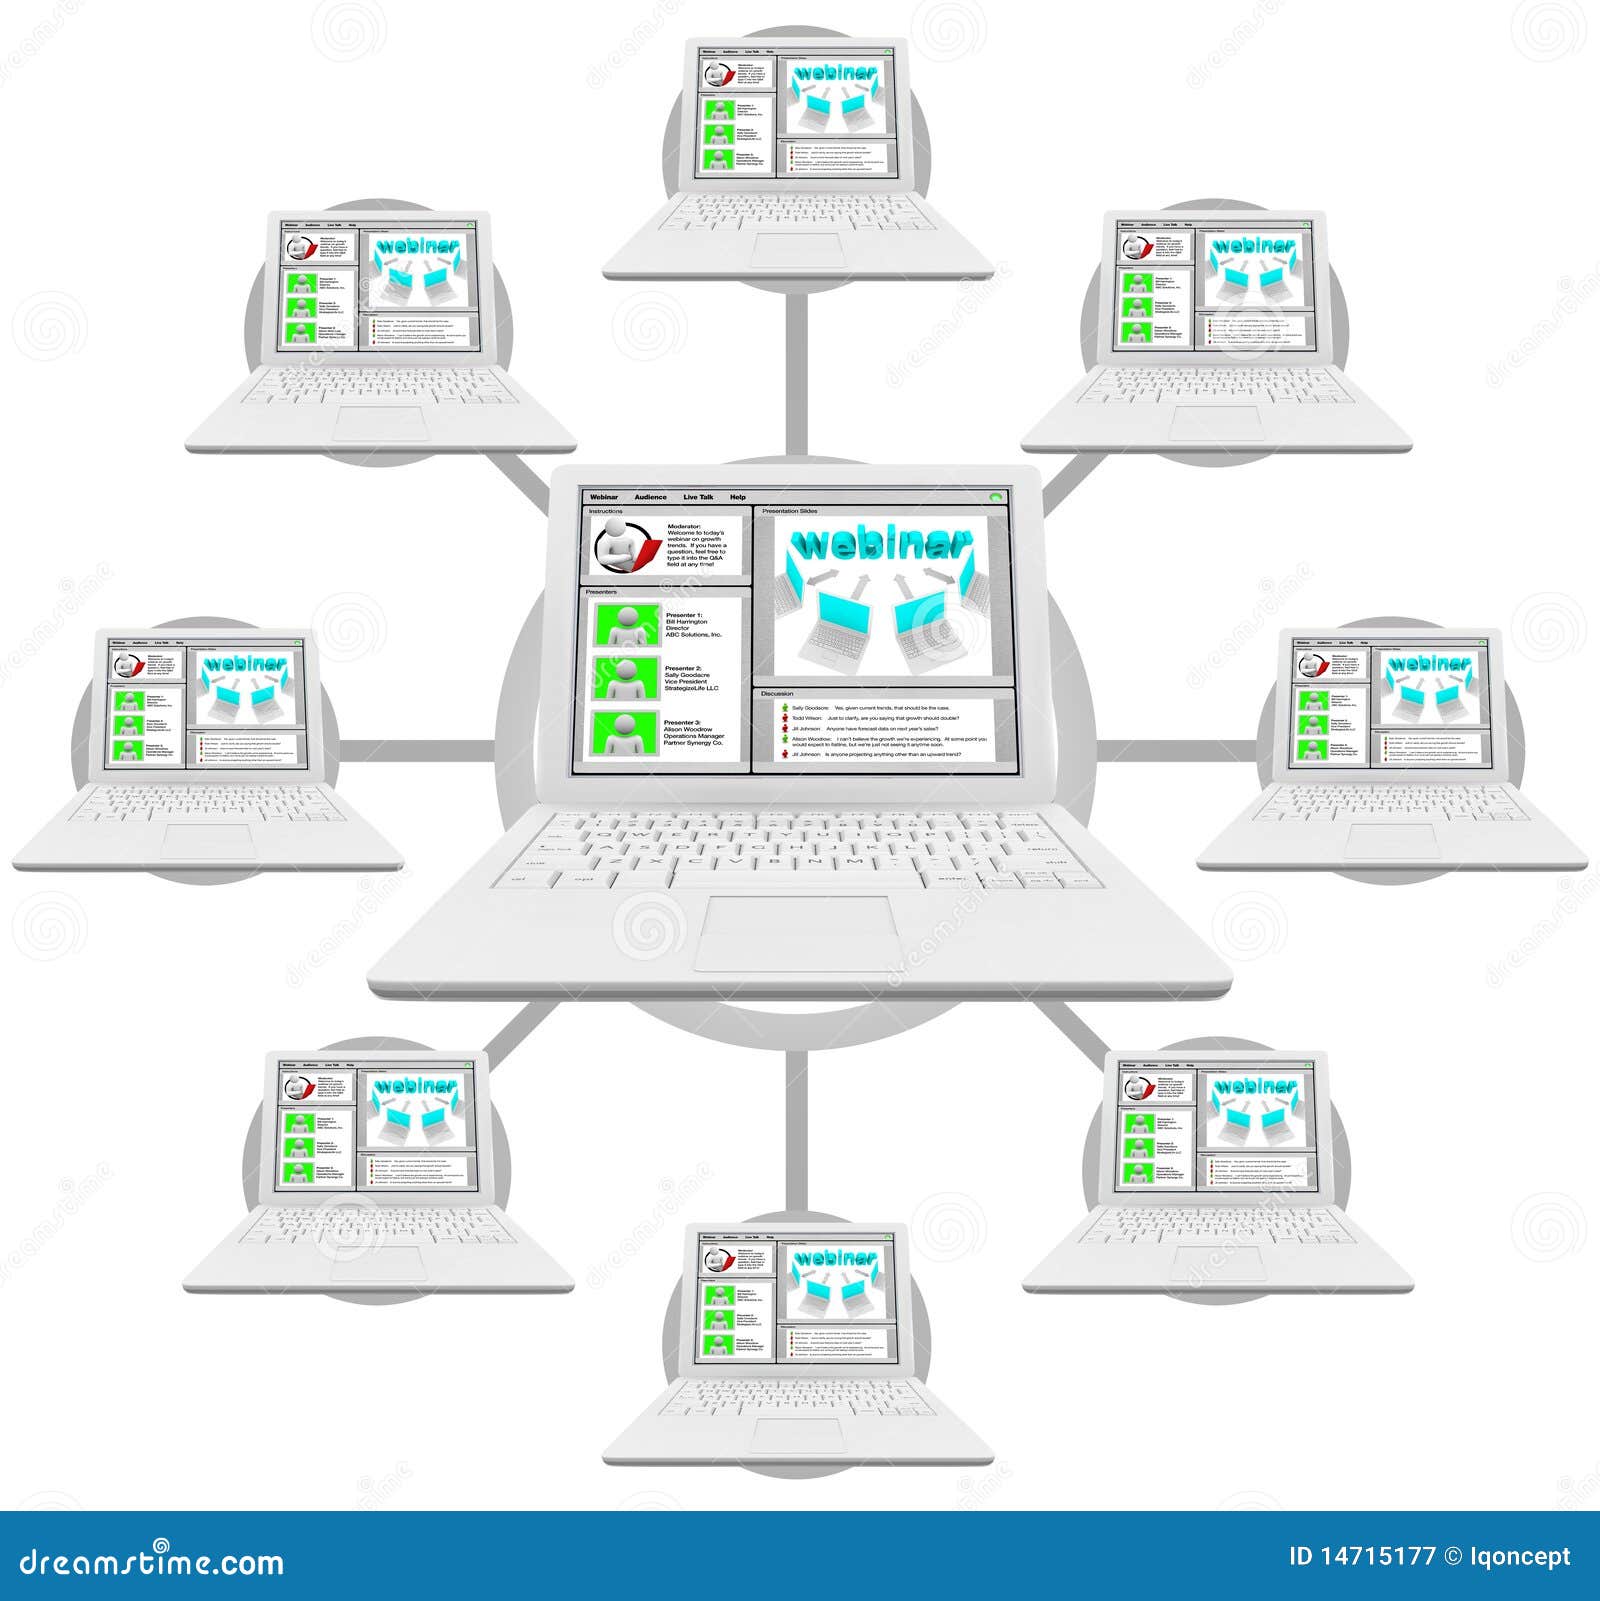 webinar - network of linked computers